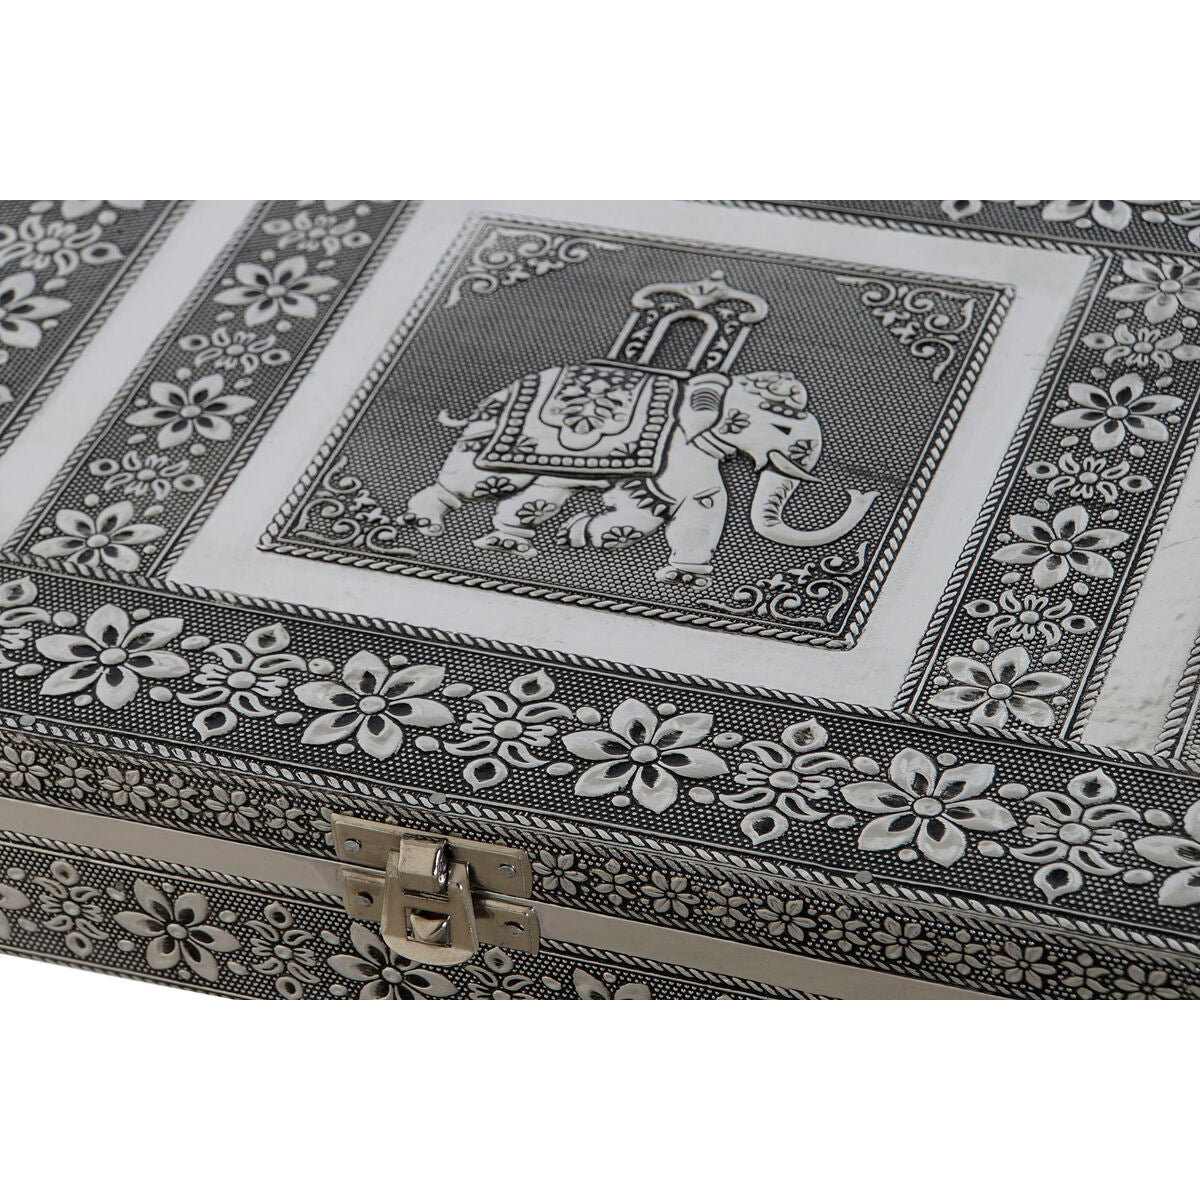 Jewelry box DKD Home Decor Silver Sky blue Wood Aluminium 27,5 x 20 x 5,4 cm